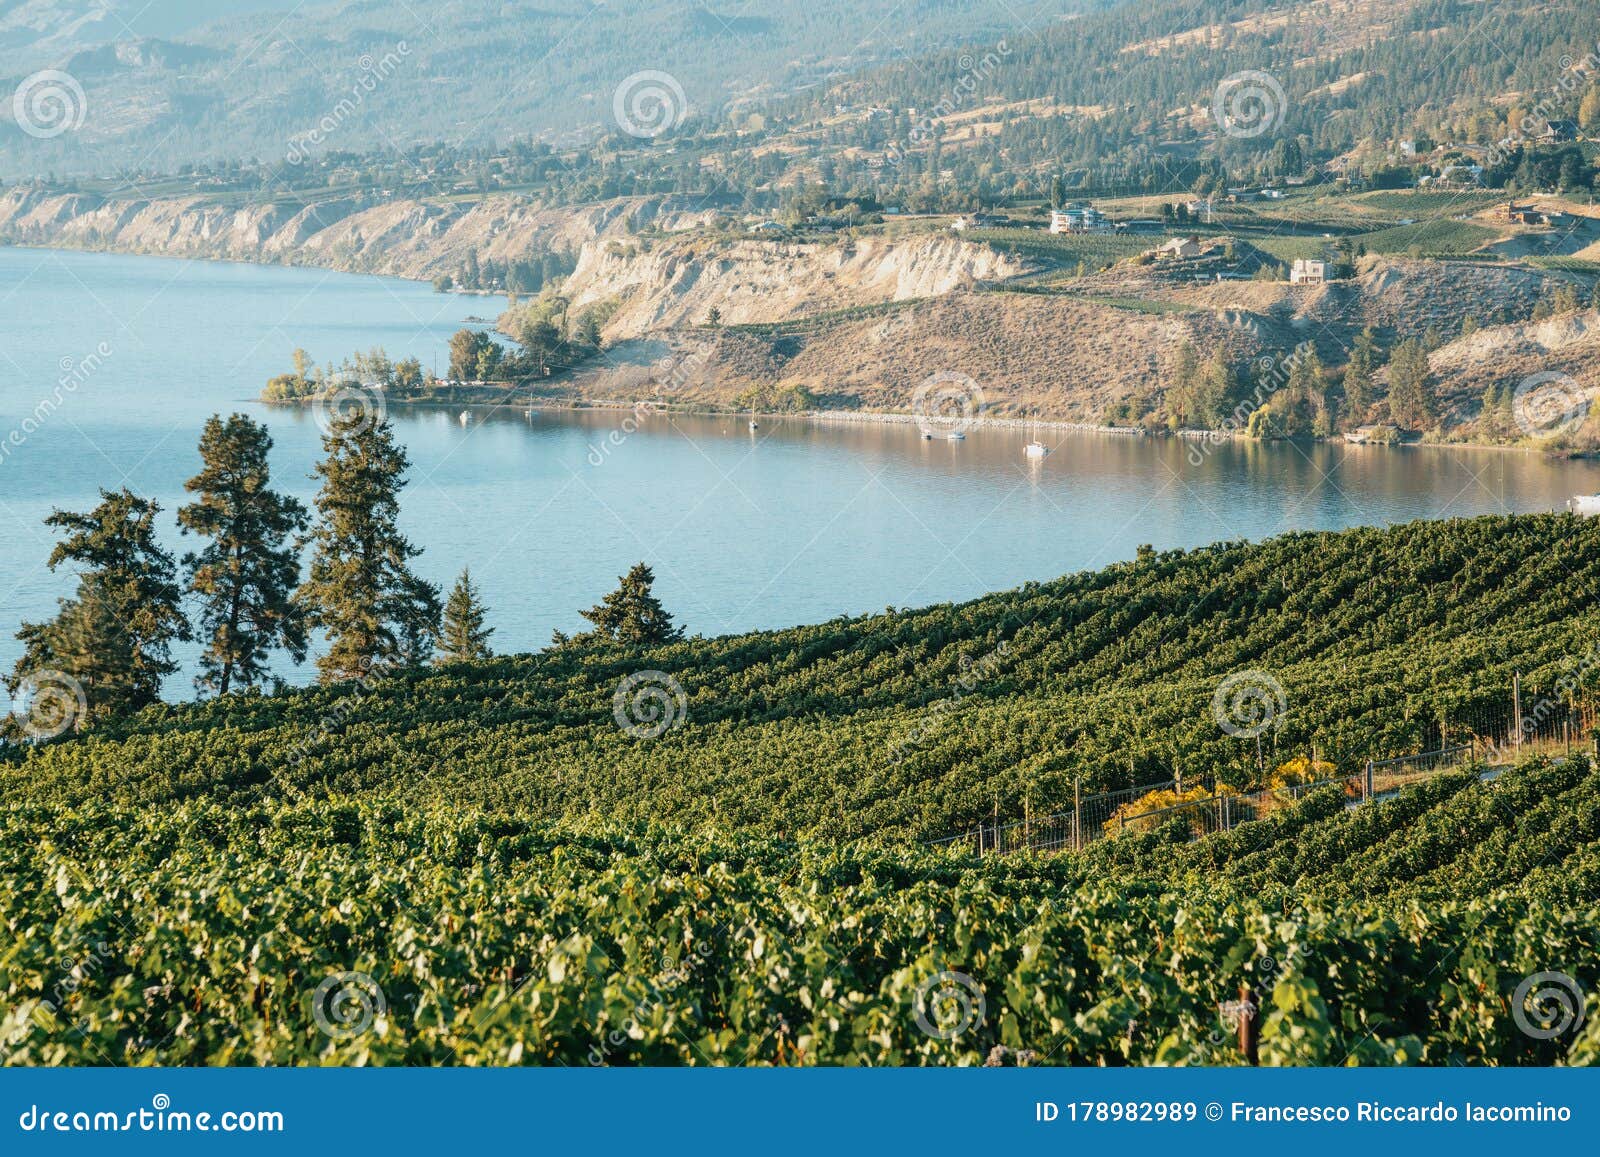 okanagan valley, vineyards near penticton, british columbia, canada